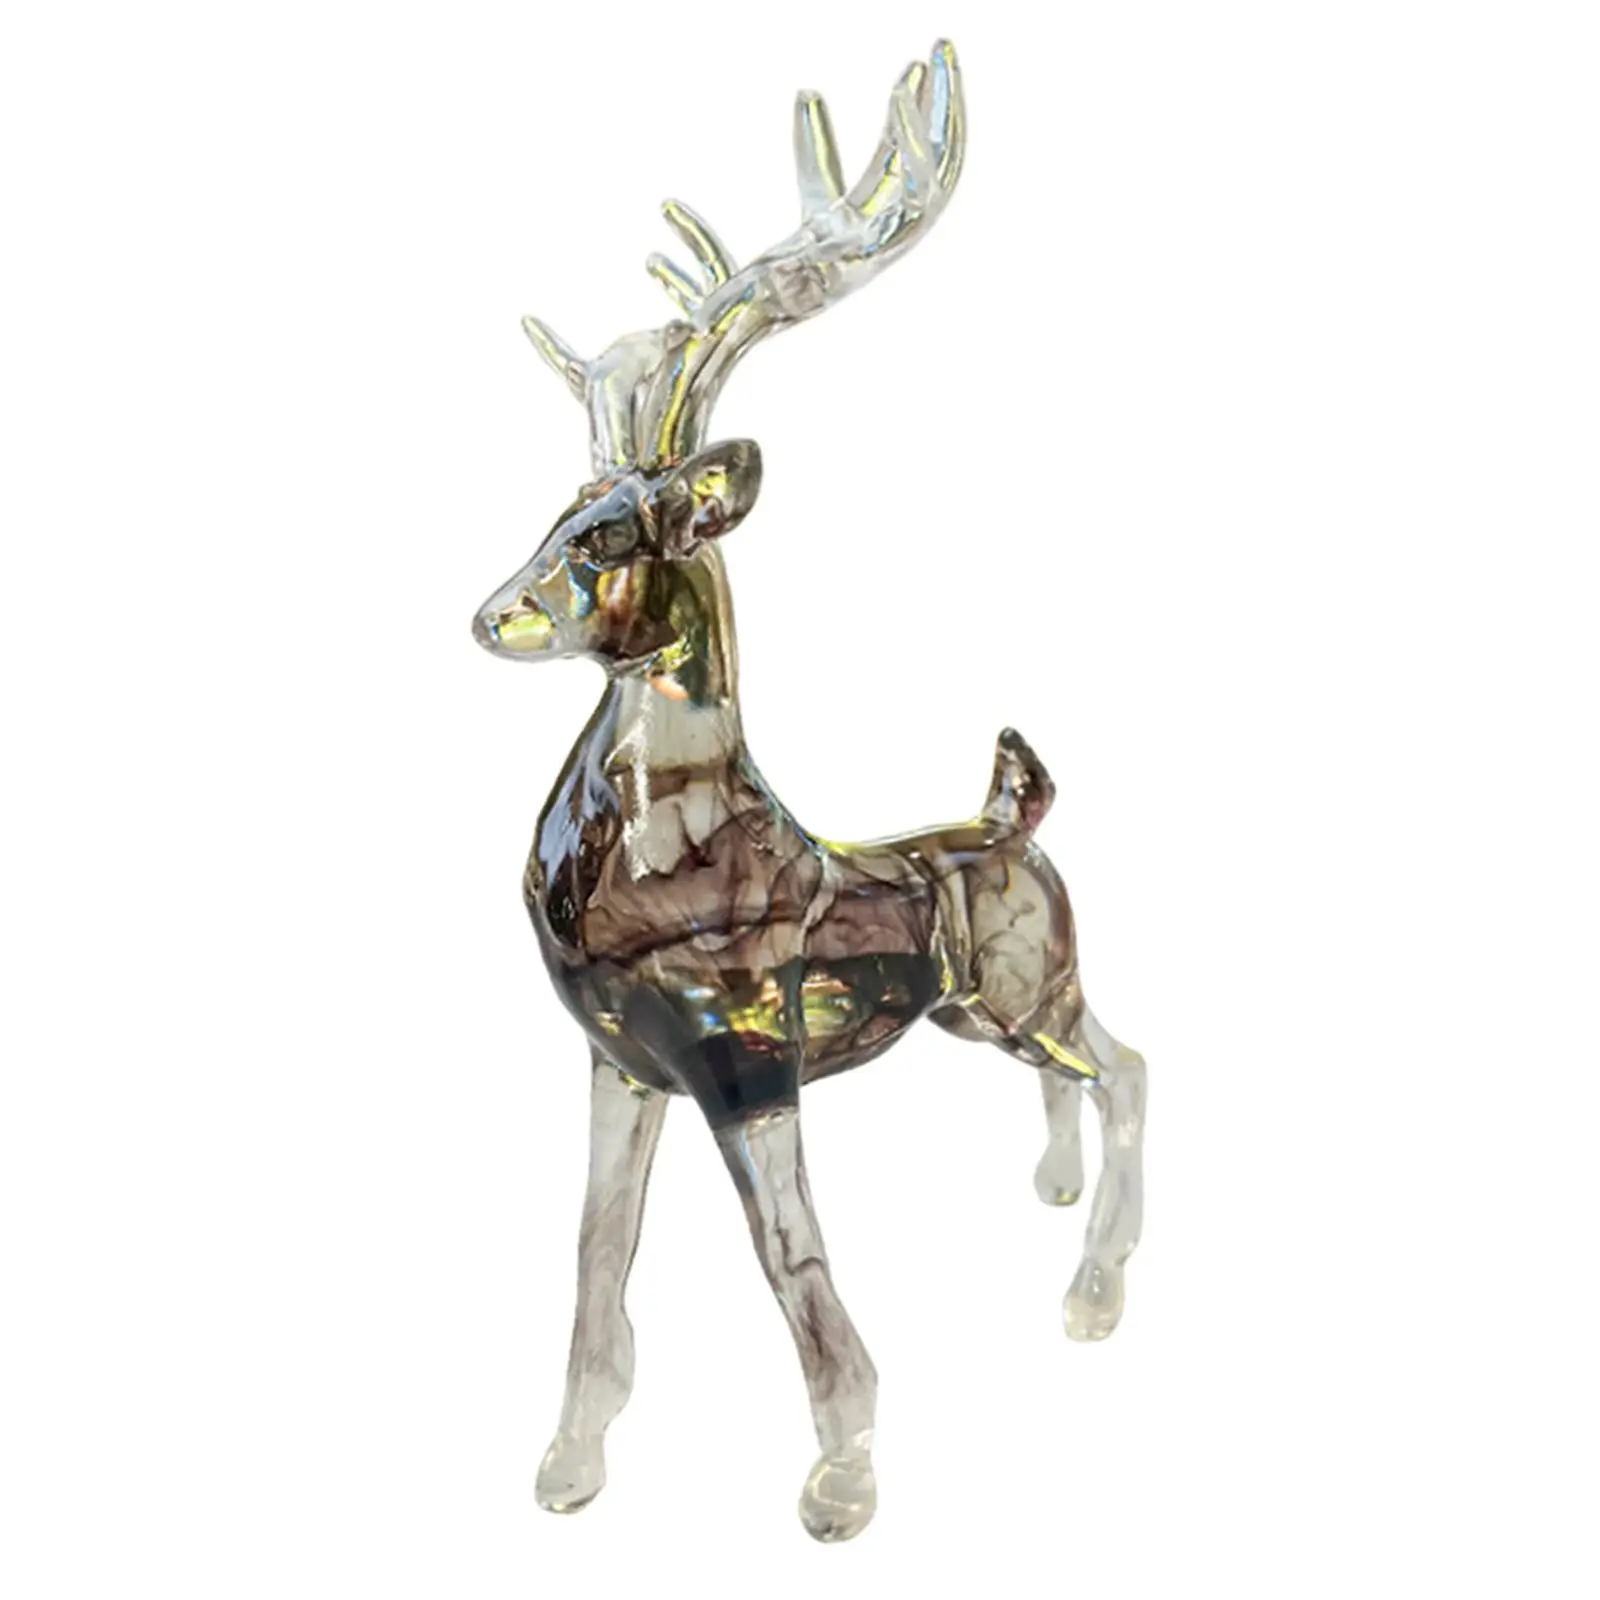 Deer Statue Crafts Art Resin Ornament European Style Gifts Deer Figurines Animal Statue for Cafe Home Car Desk Living Room